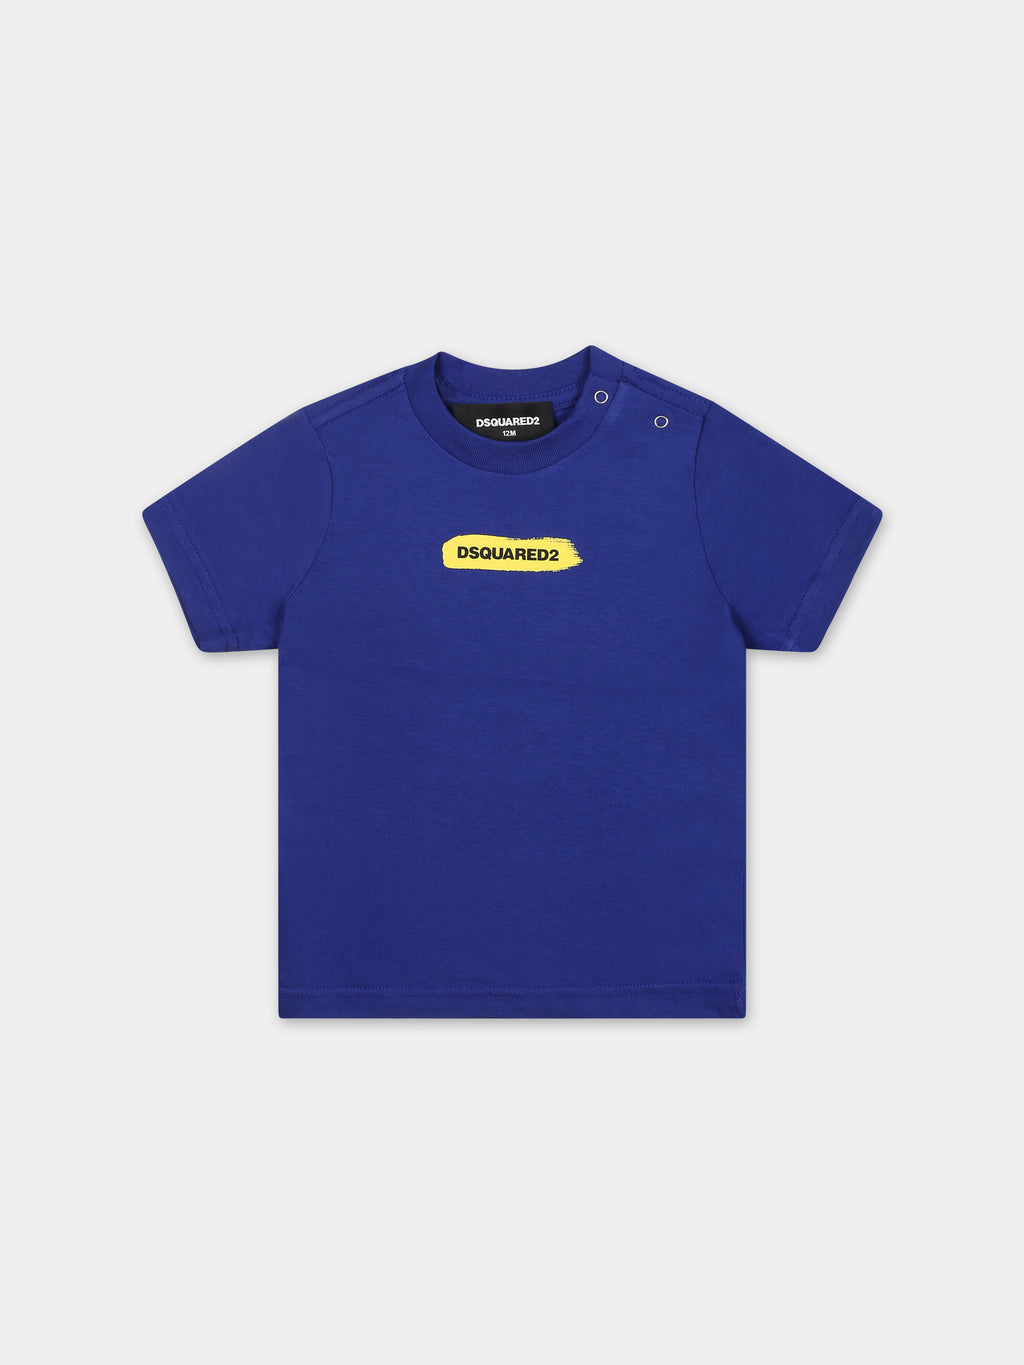 T-shirt bleu ciel pour bébé garçon avec logo